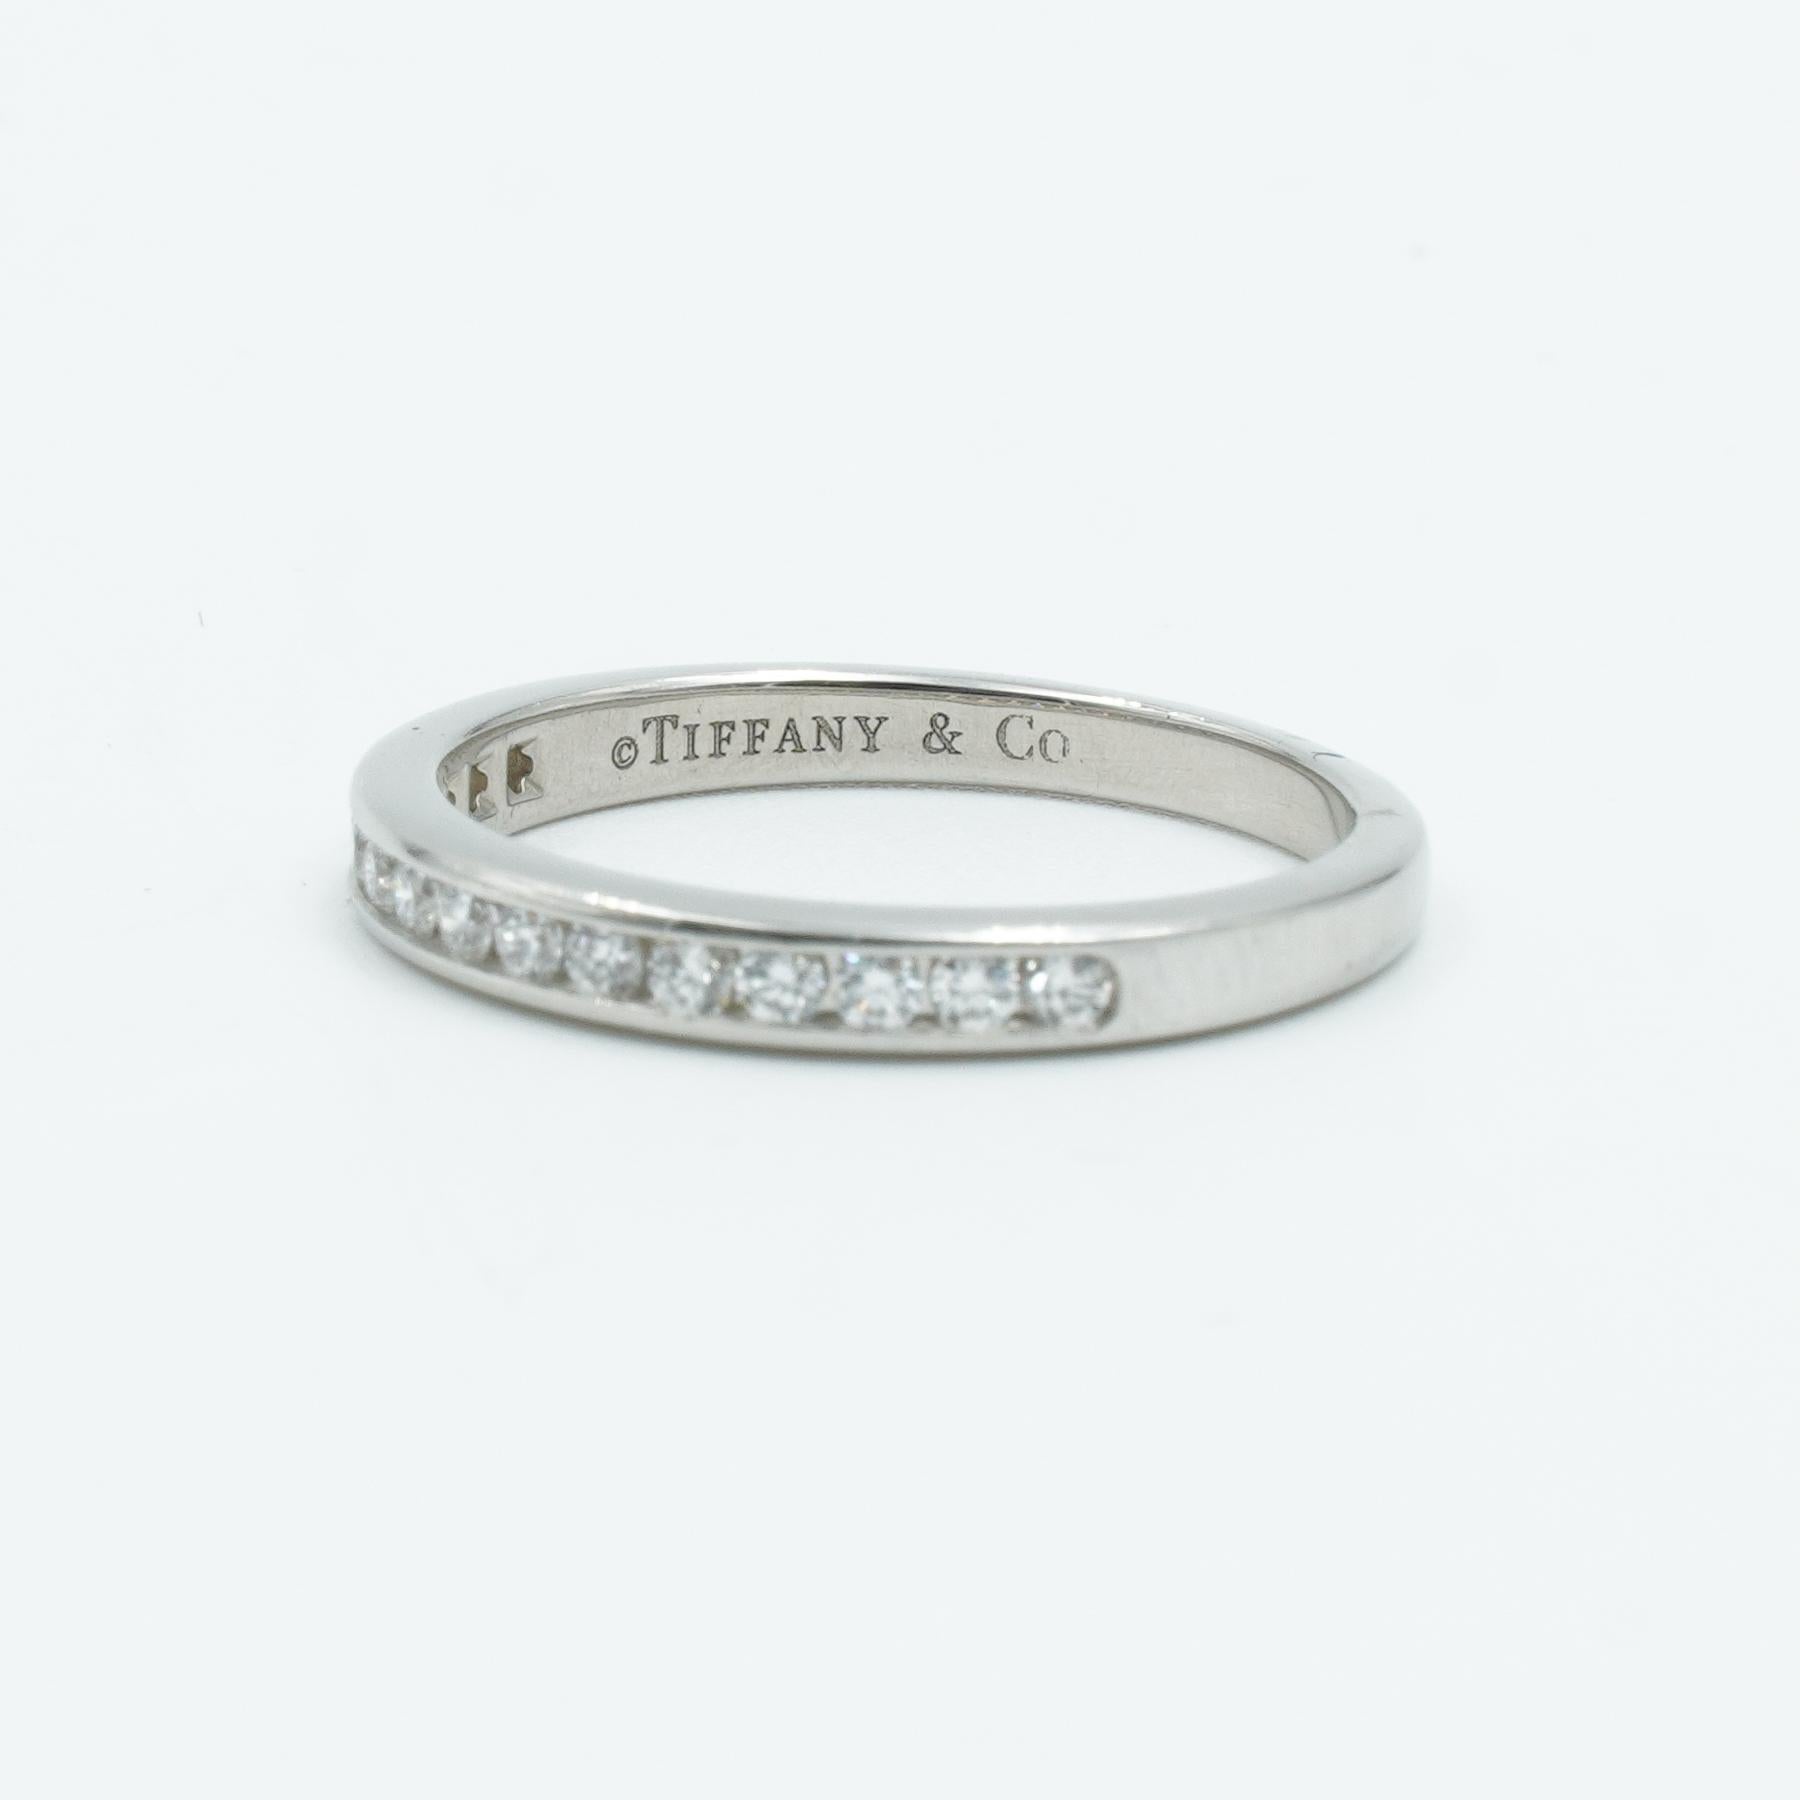 Tiffany & Co. 1.54 Ctw Diamond Engagement Ring Set in Platinum w. Box 1